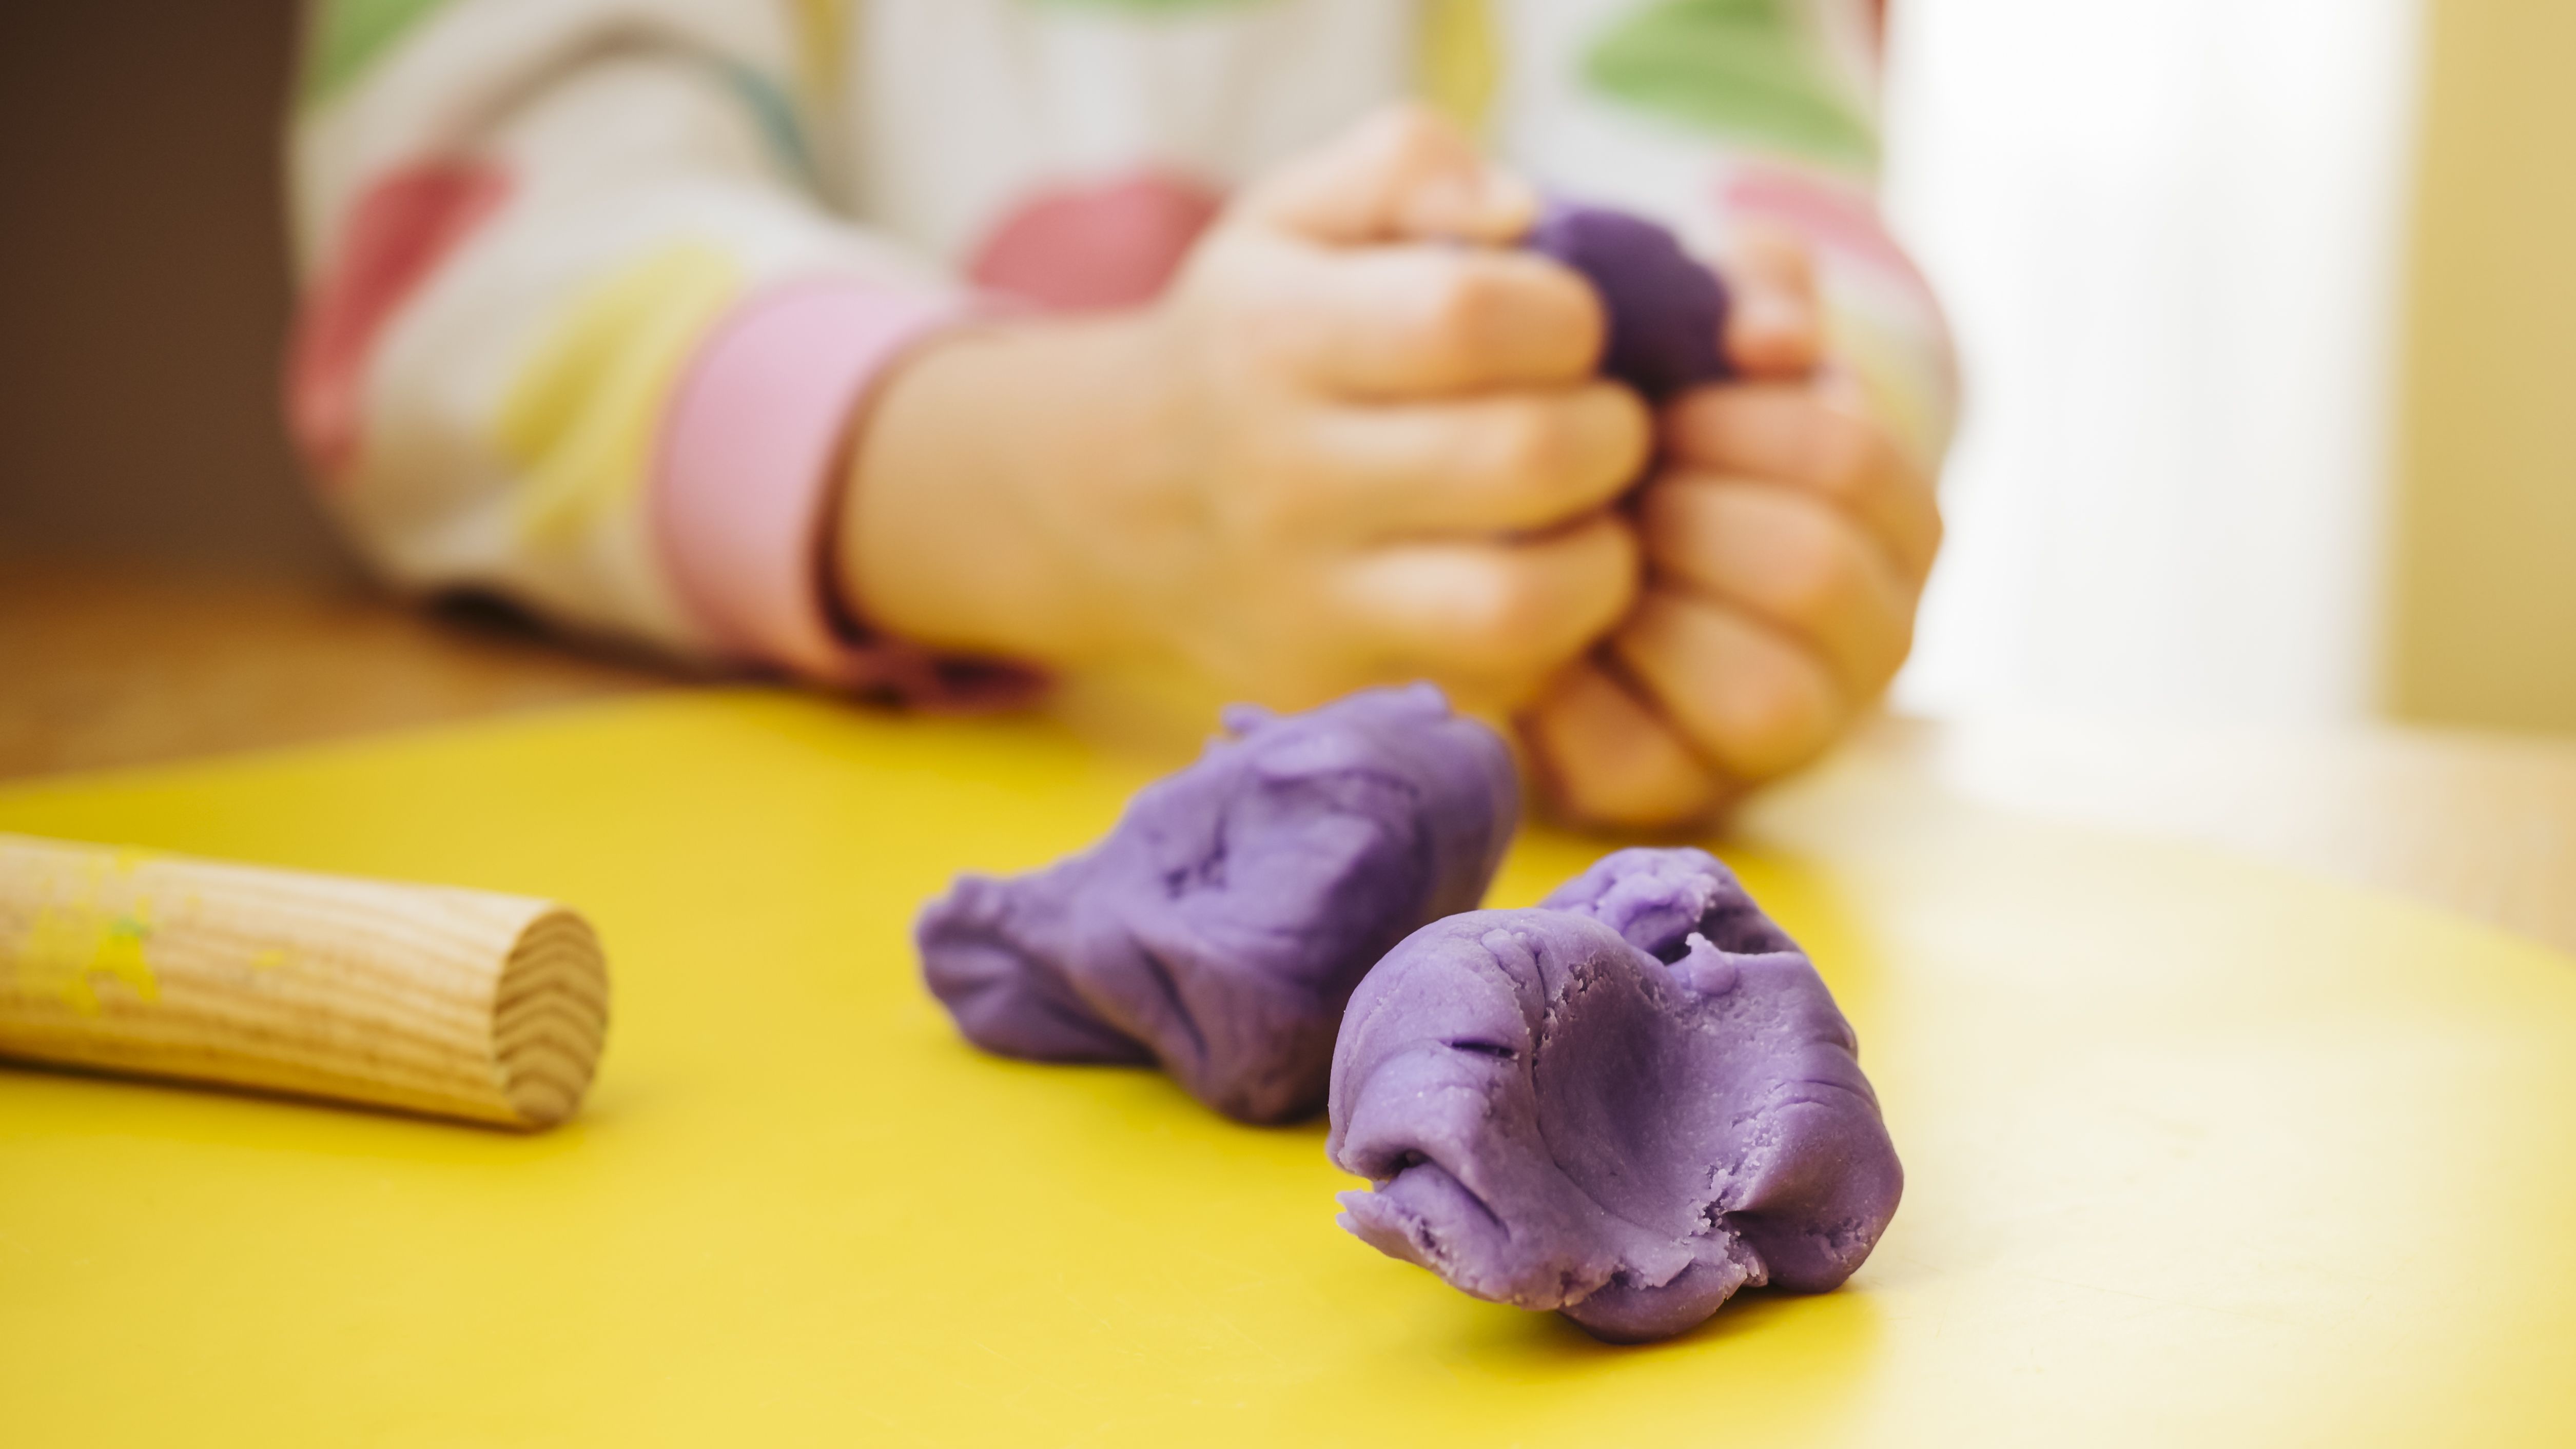 How to Make Homemade Playdough: An Easy DIY Recipe - Utopia